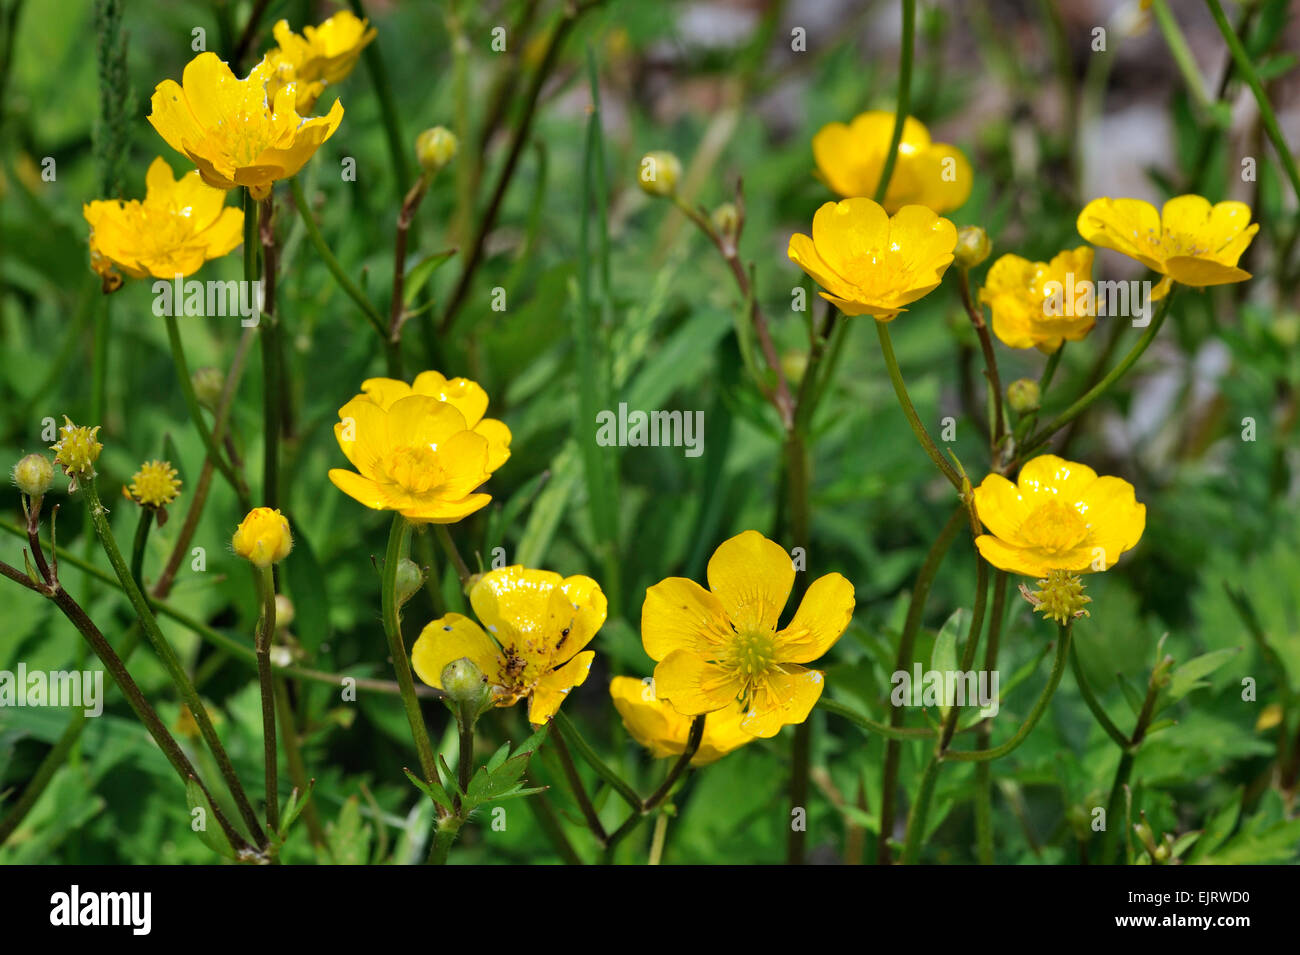 Creeping buttercup / Creeping crowfoot (Ranunculus repens) in flower Stock Photo